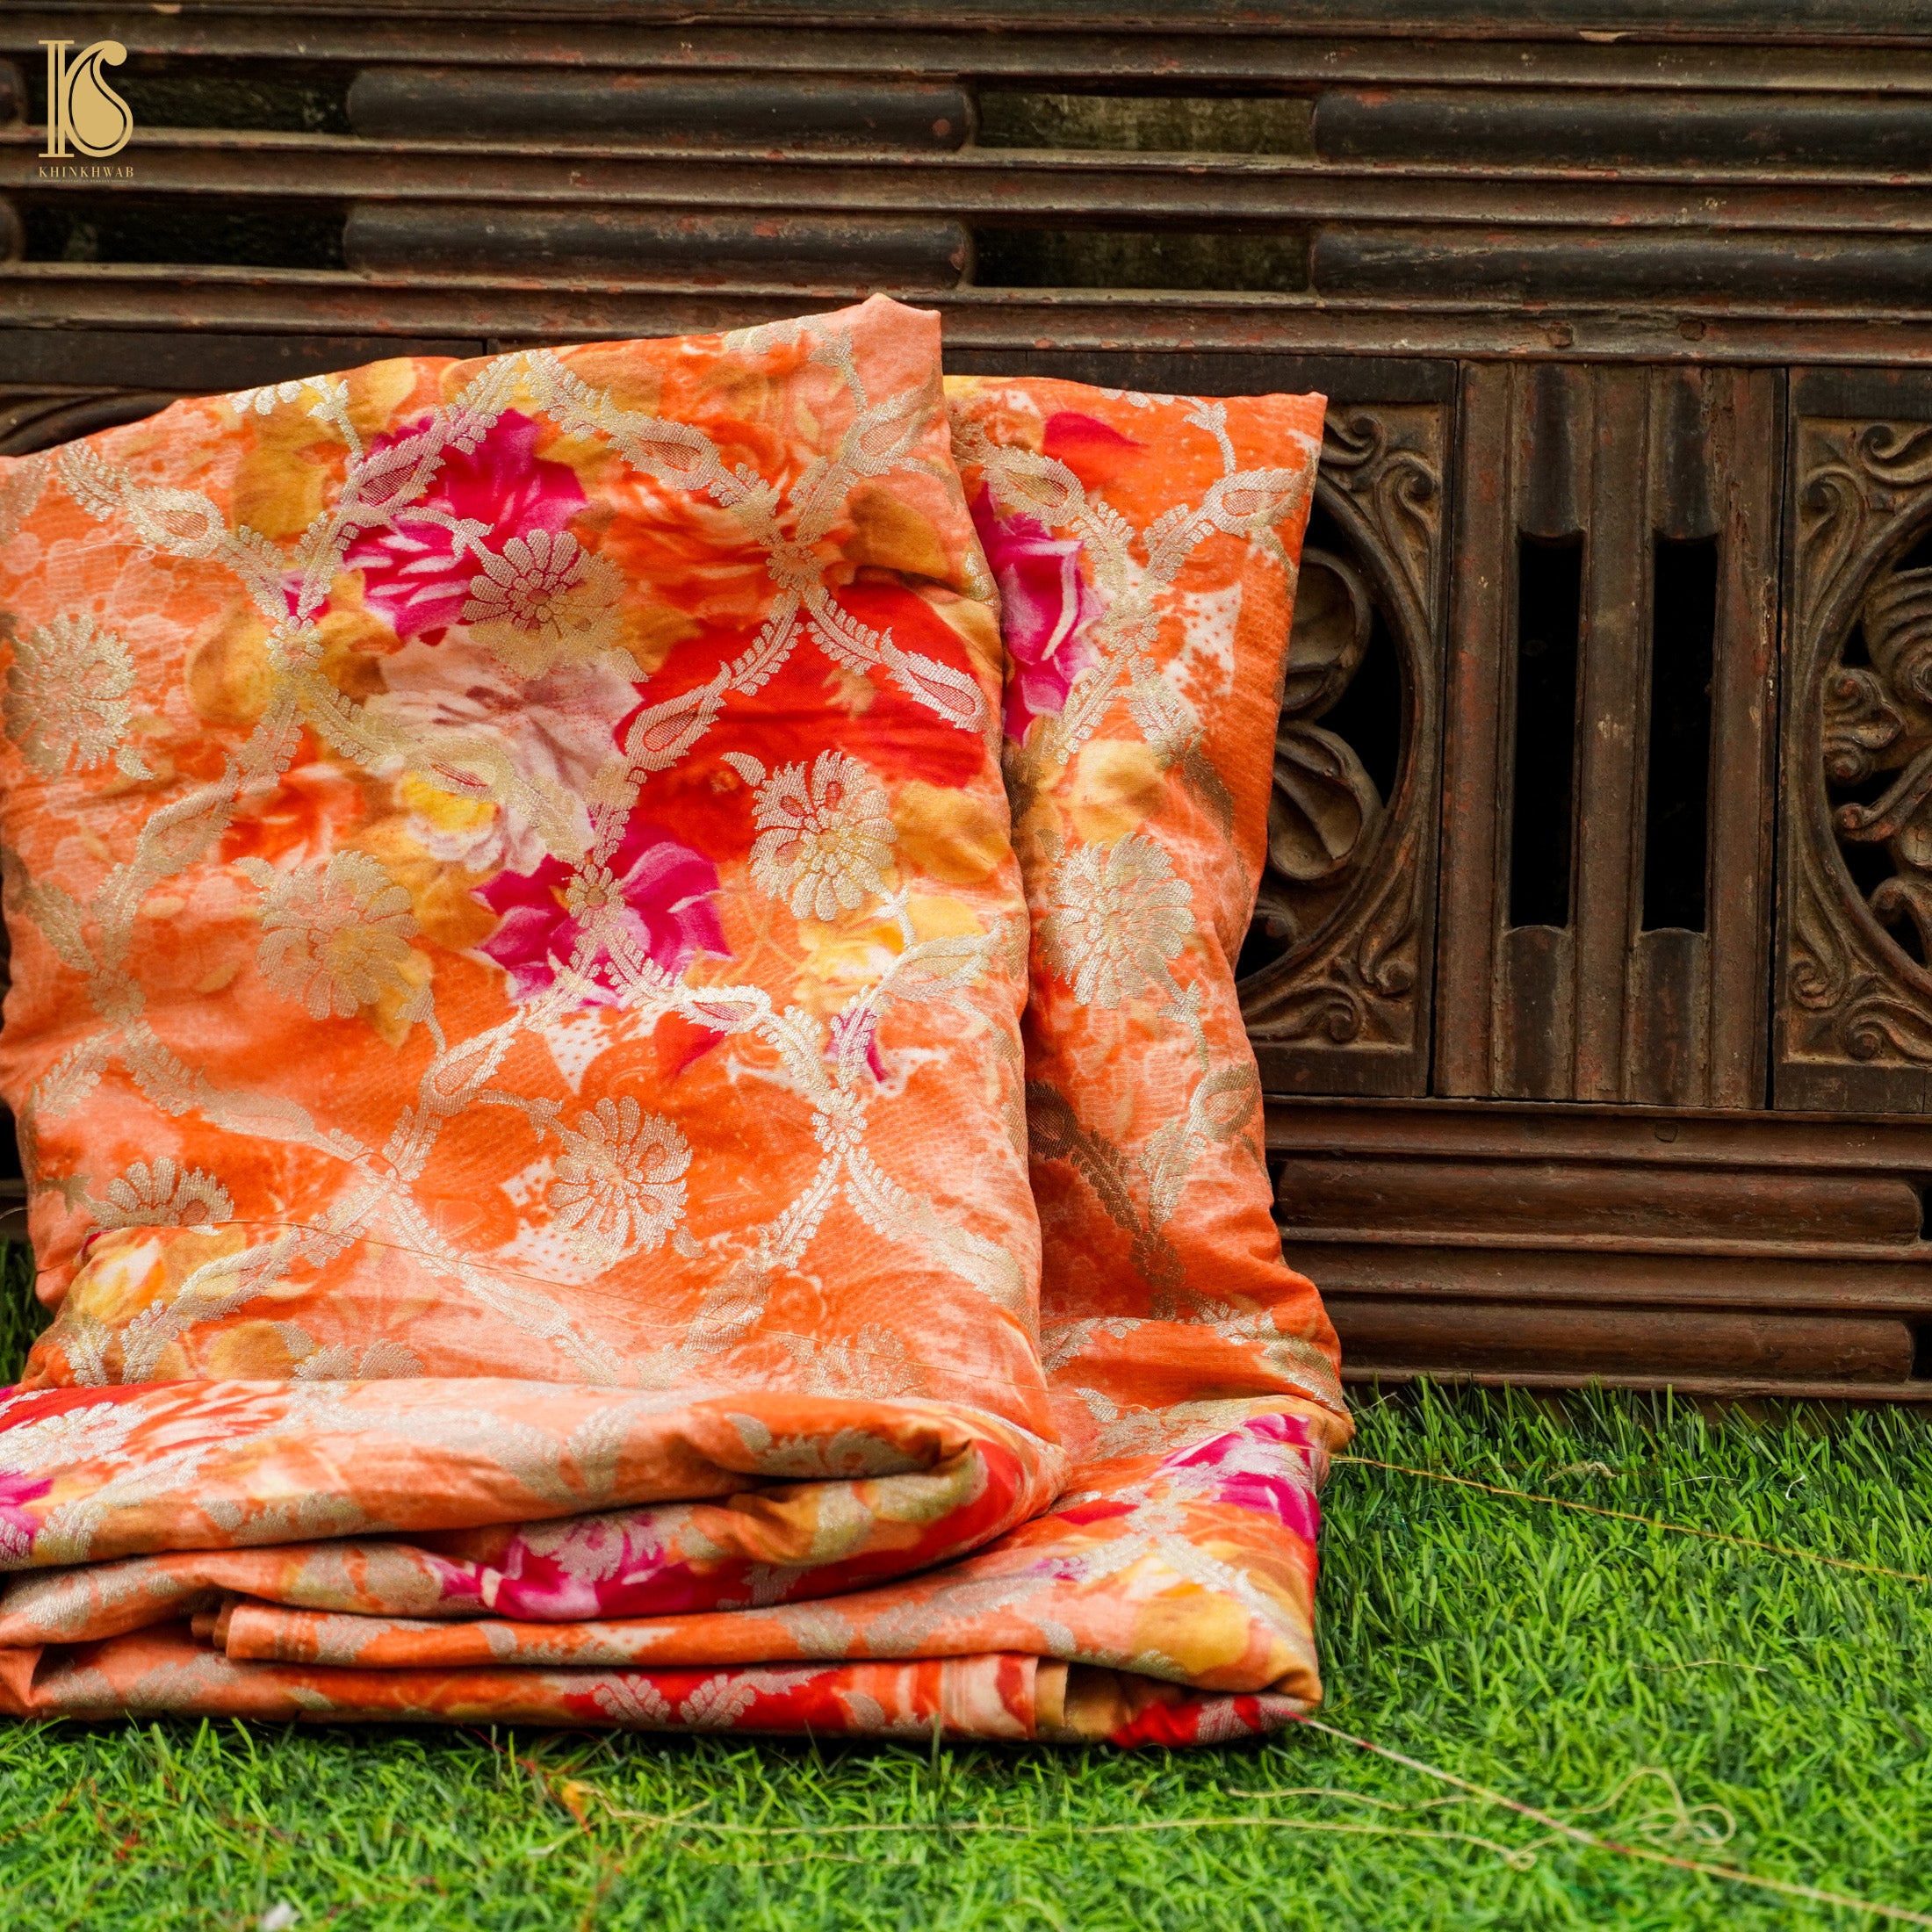 Peach Pure Cotton Silk Banarasi Print Fabric - Khinkhwab